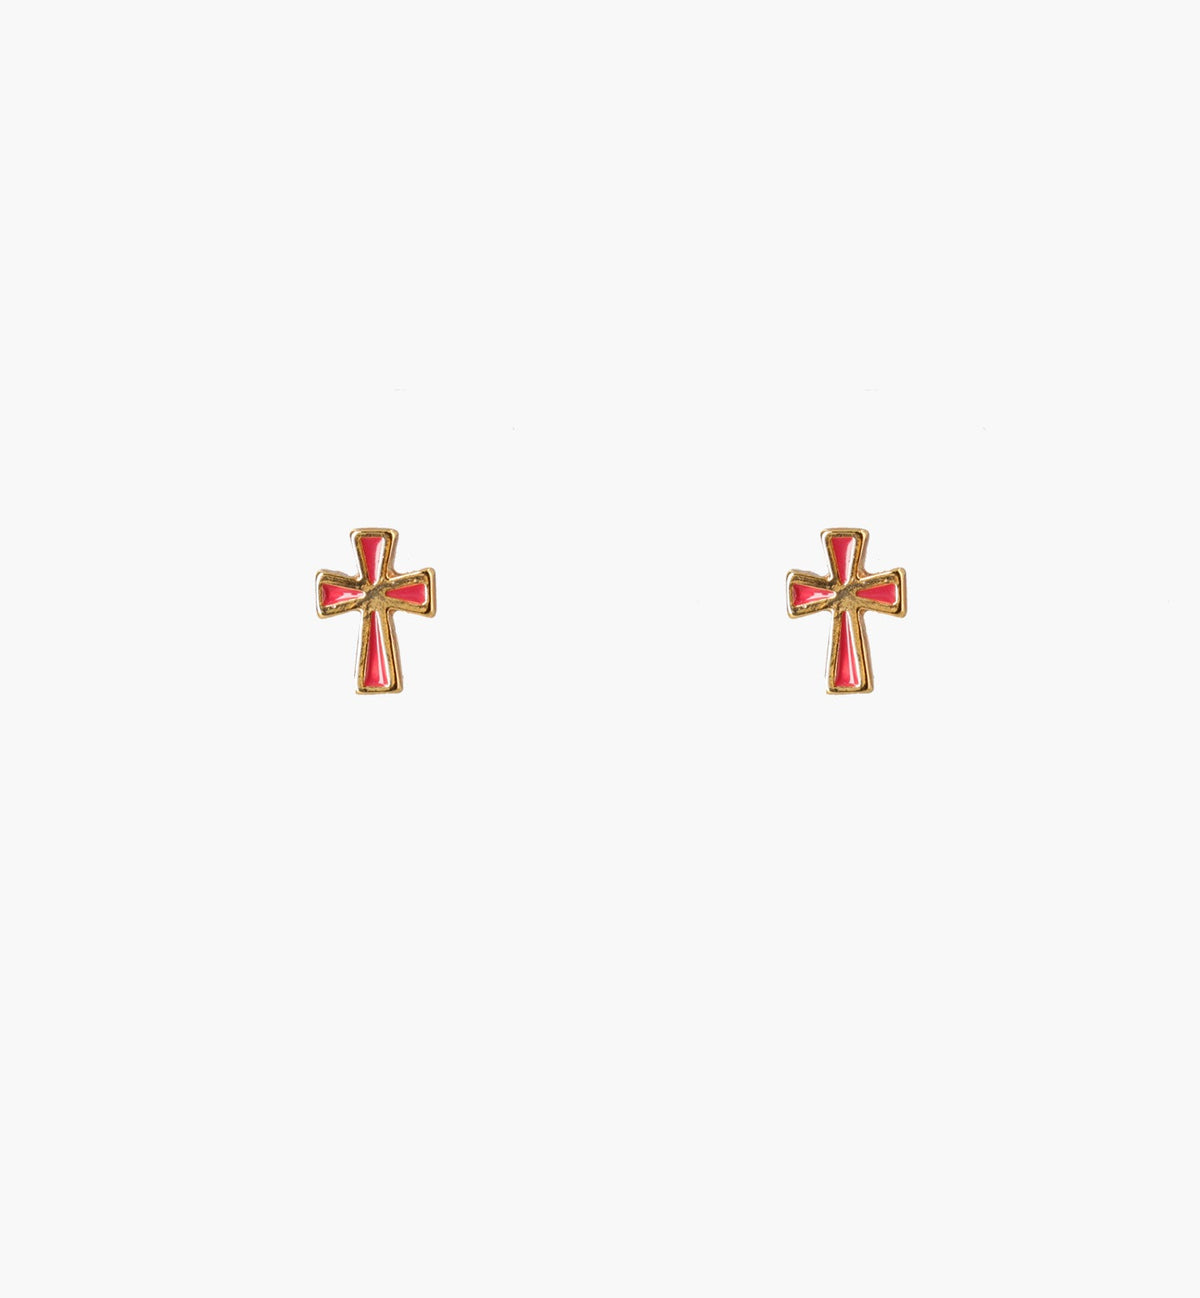 The Cross Studs